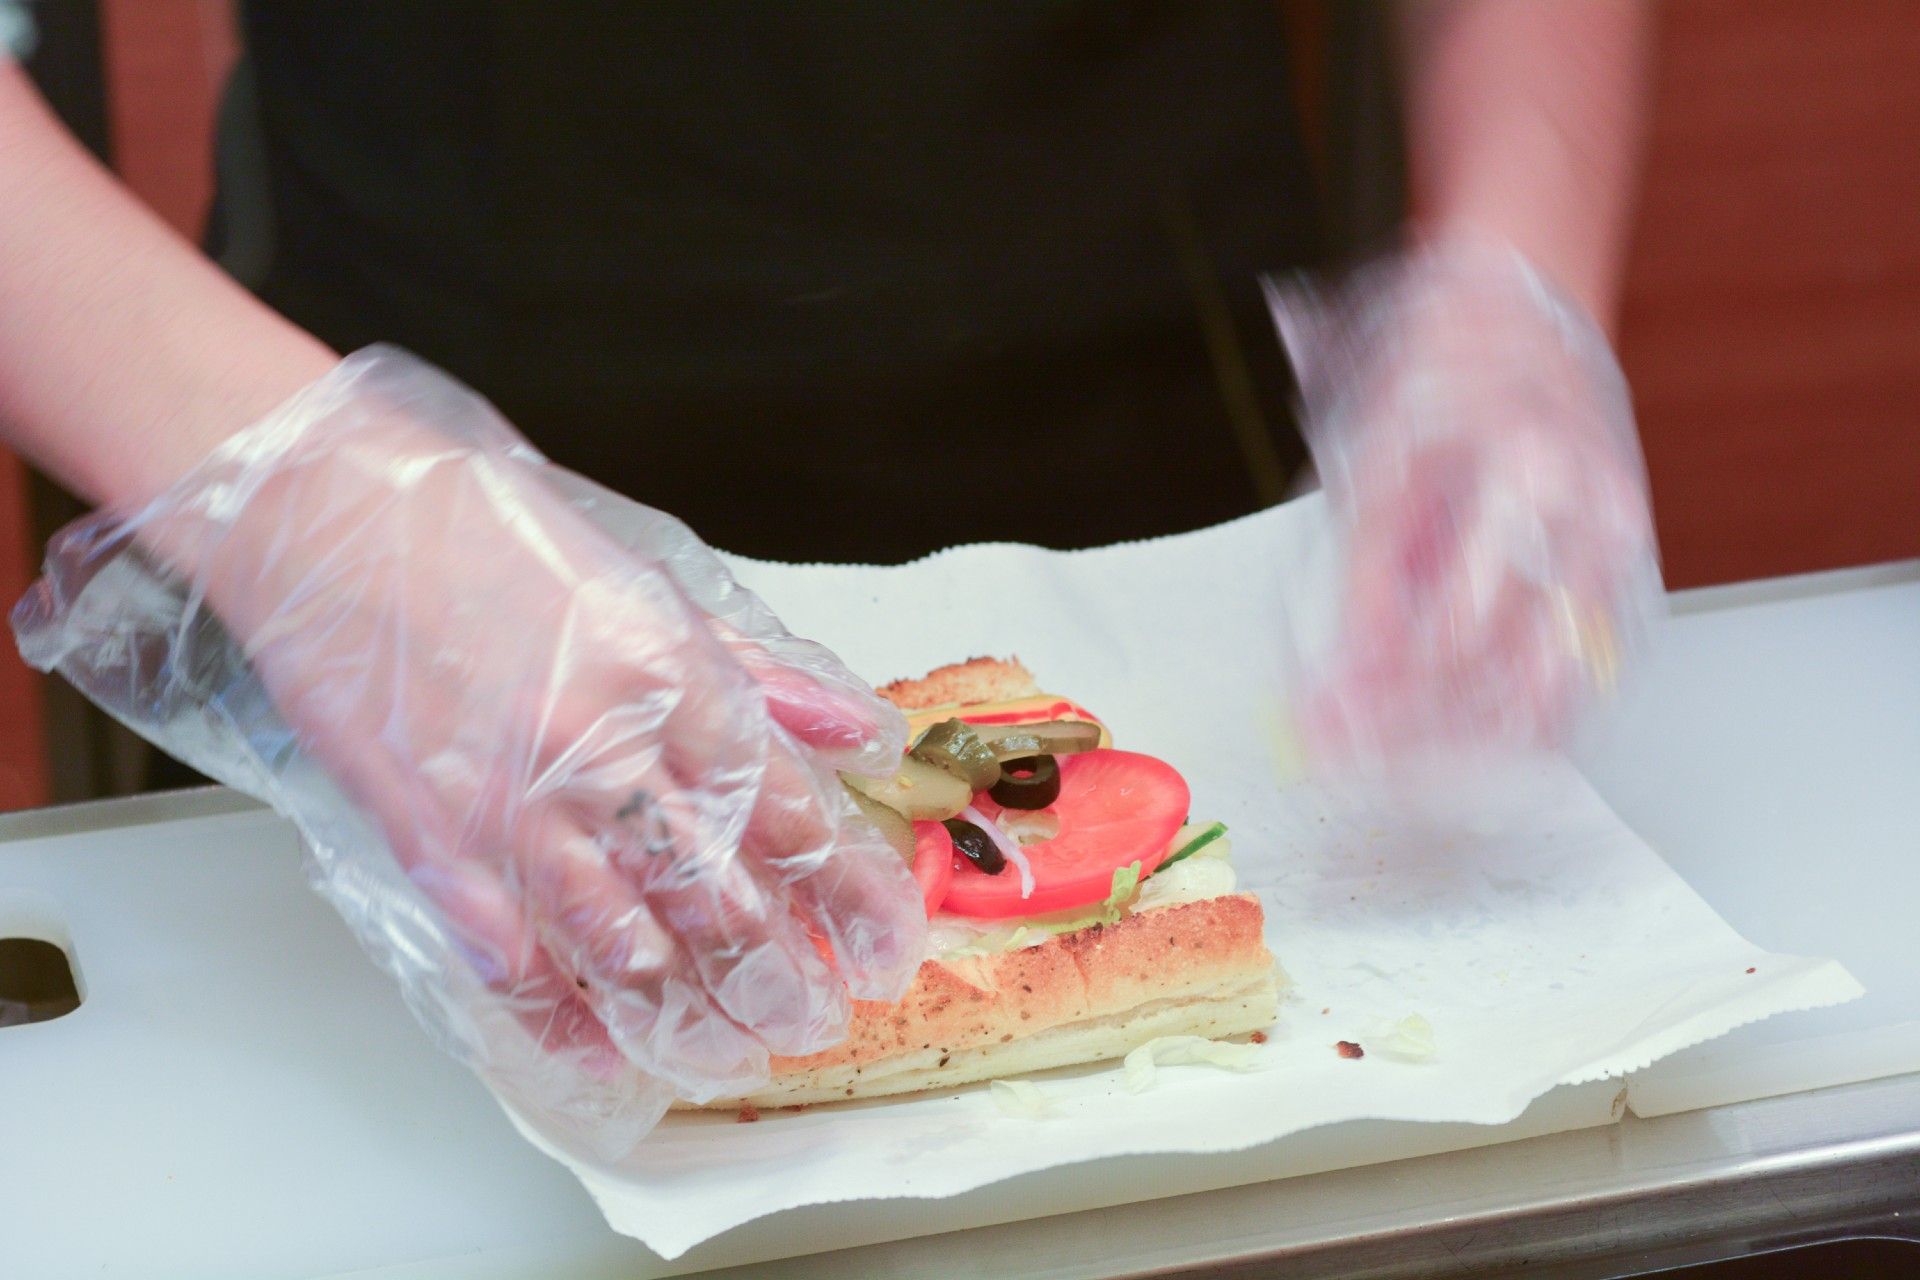 Sandwich shop employee makes a sub sandwich - Subway bread